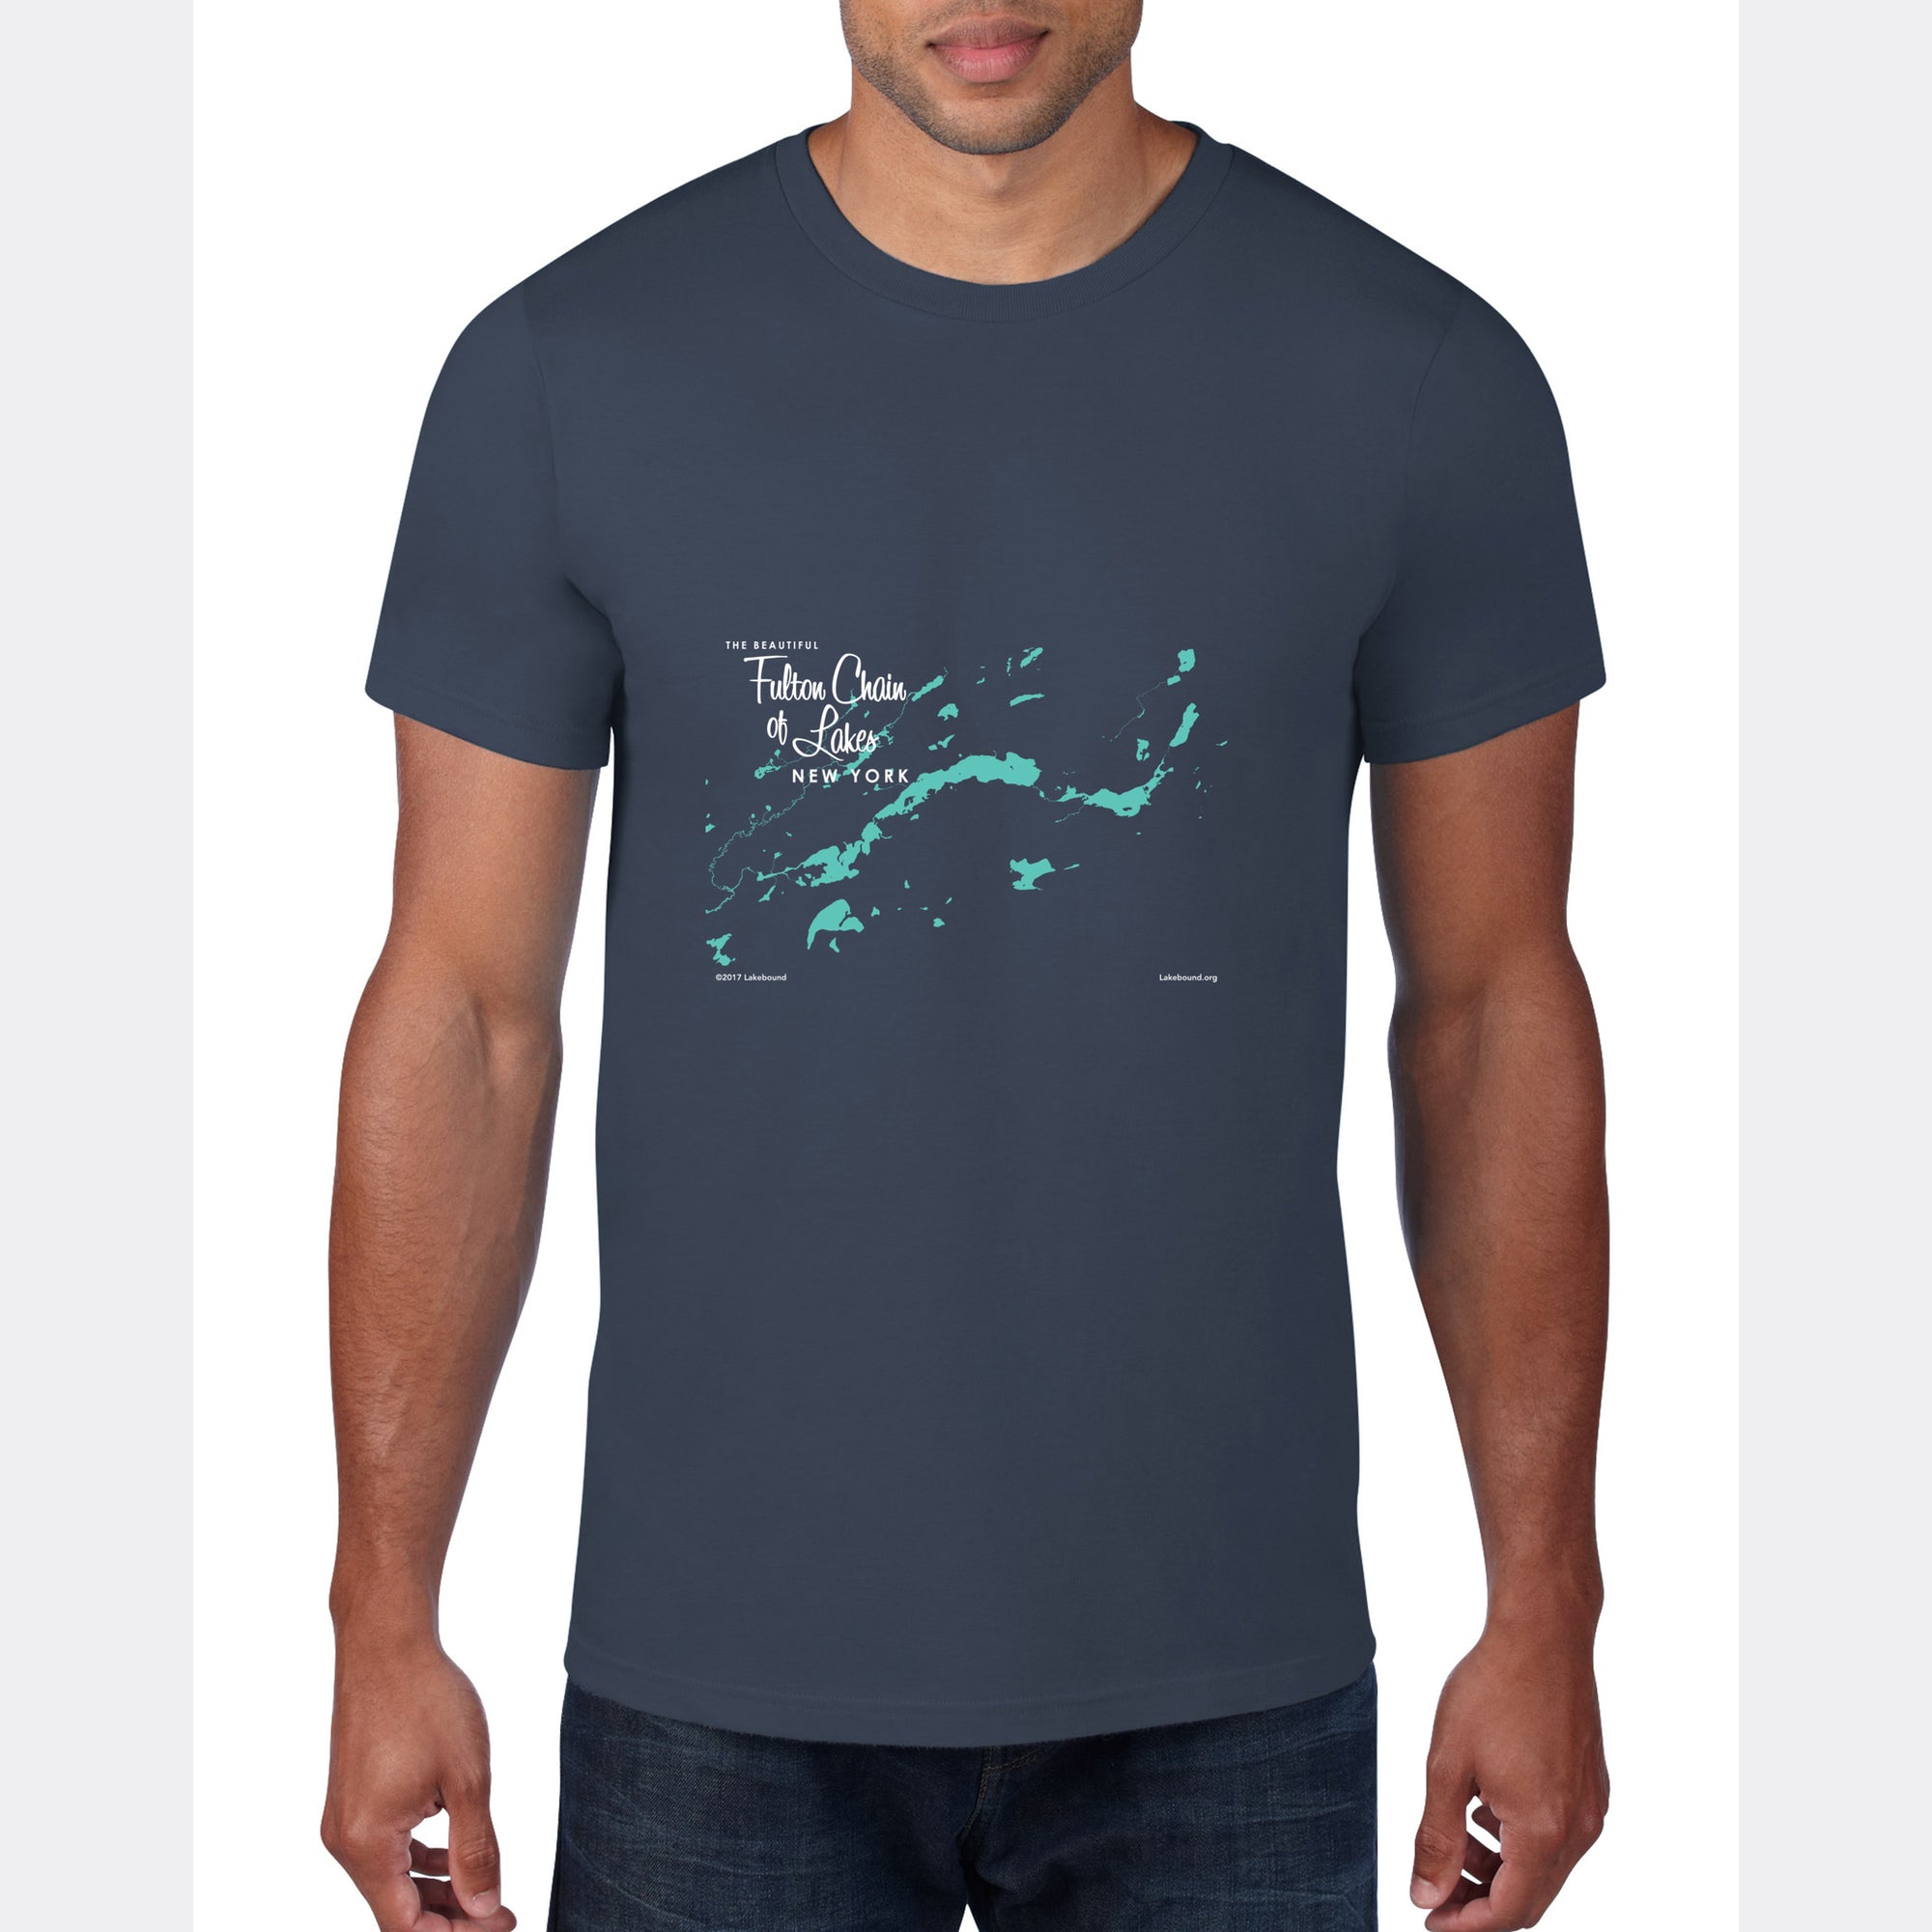 Fulton Chain of Lakes New York, T-Shirt